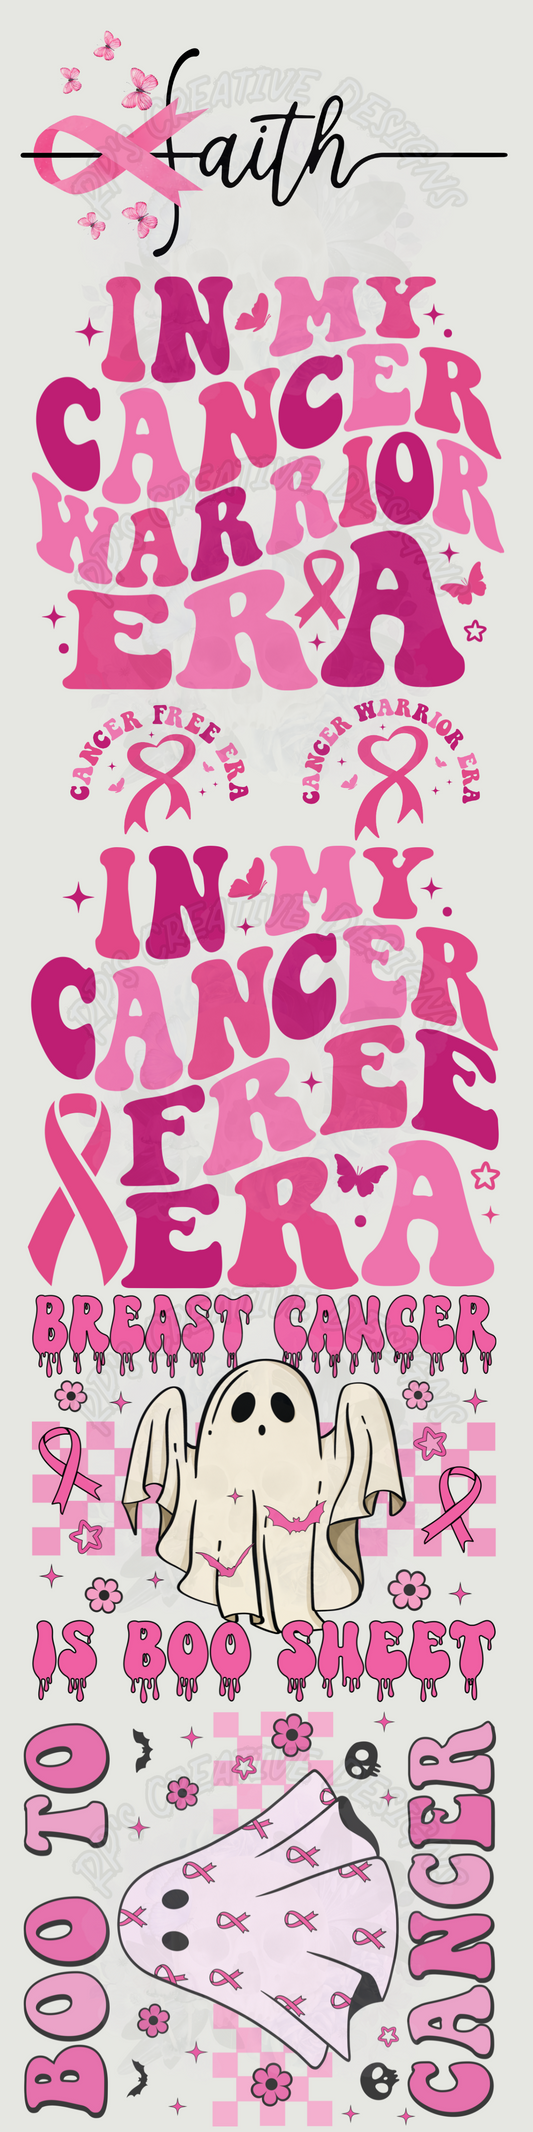 Breast Cancer Awareness w/ Pockets Gang Sheet DTF